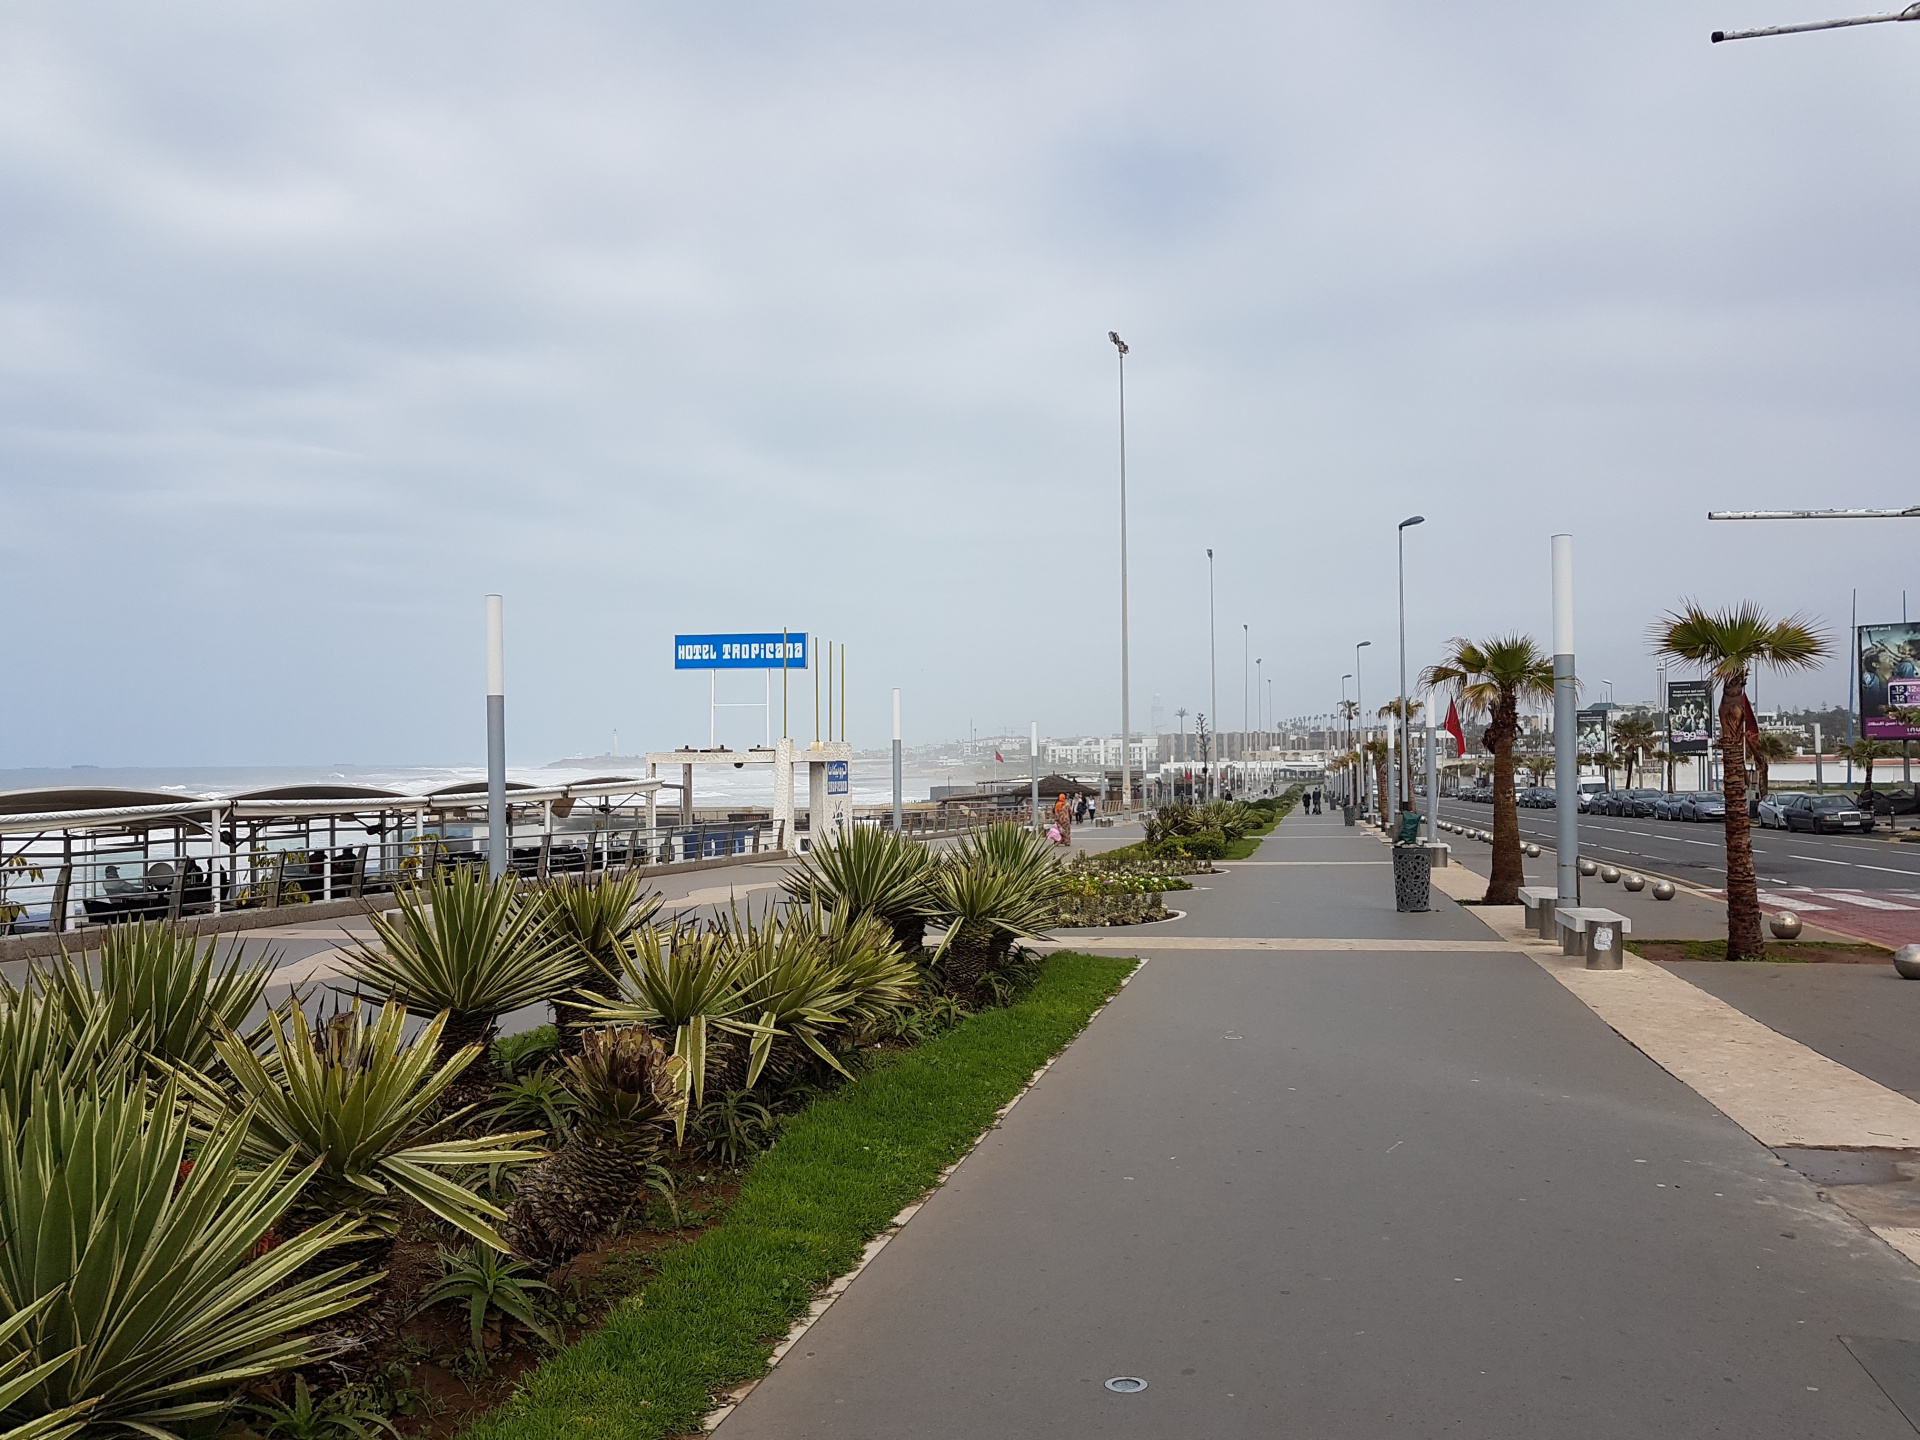 20180315-143507-Atlanic_Promenade-Casablanca-SJ.jpg